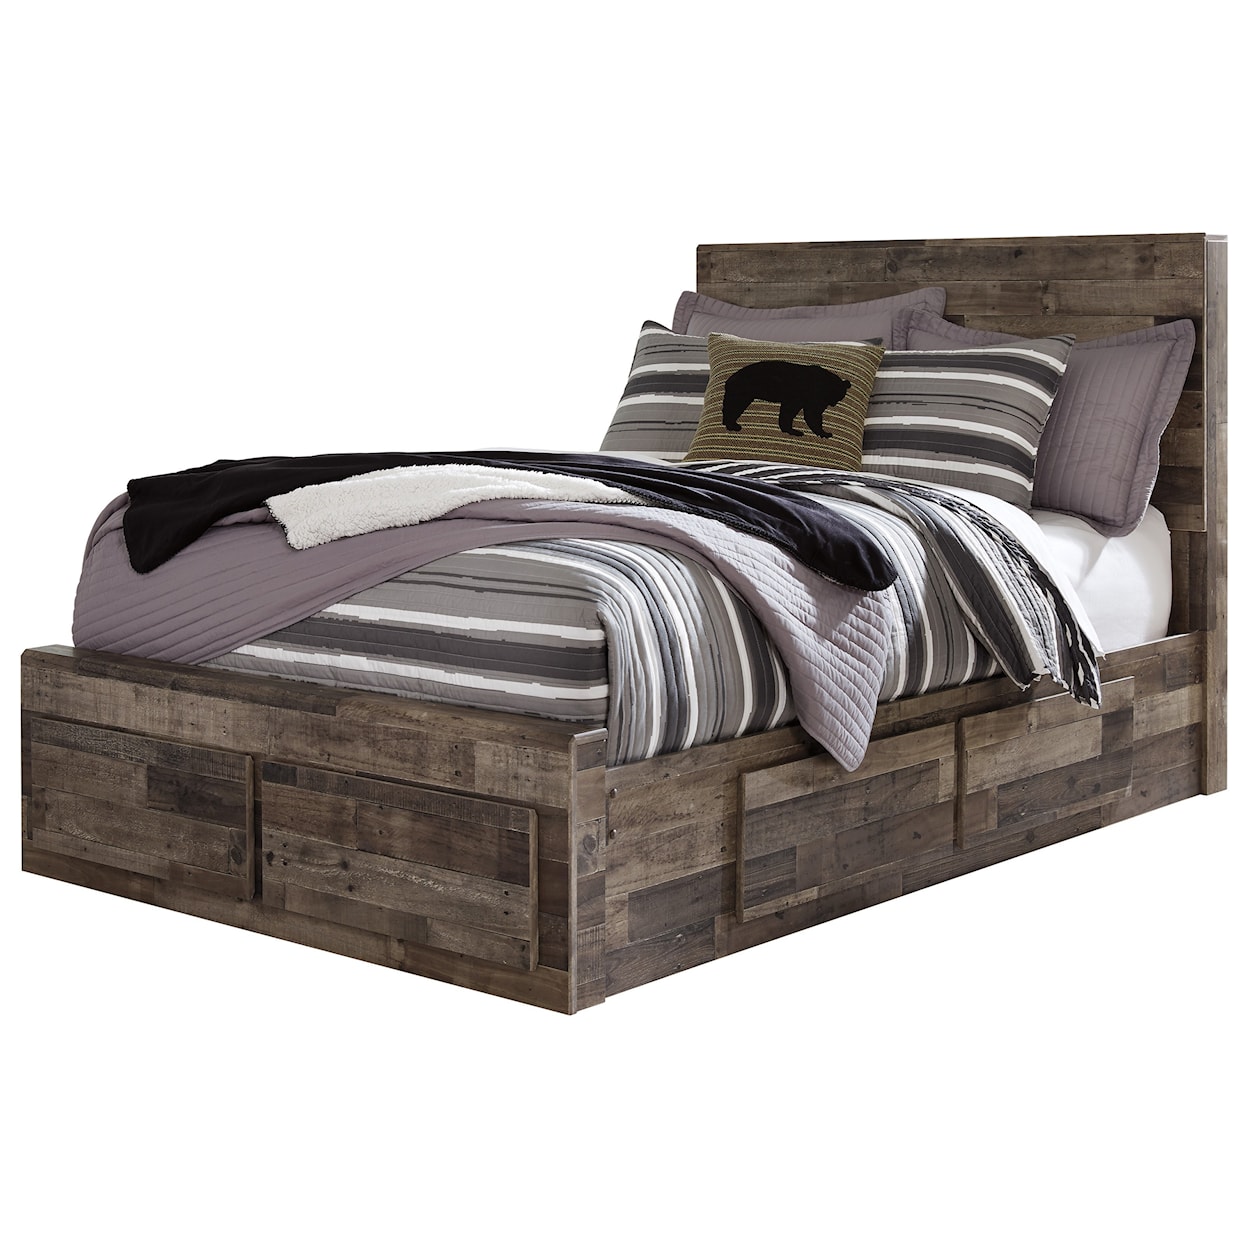 Ashley Furniture Benchcraft Derekson Full Storage Bed with 6 Drawers